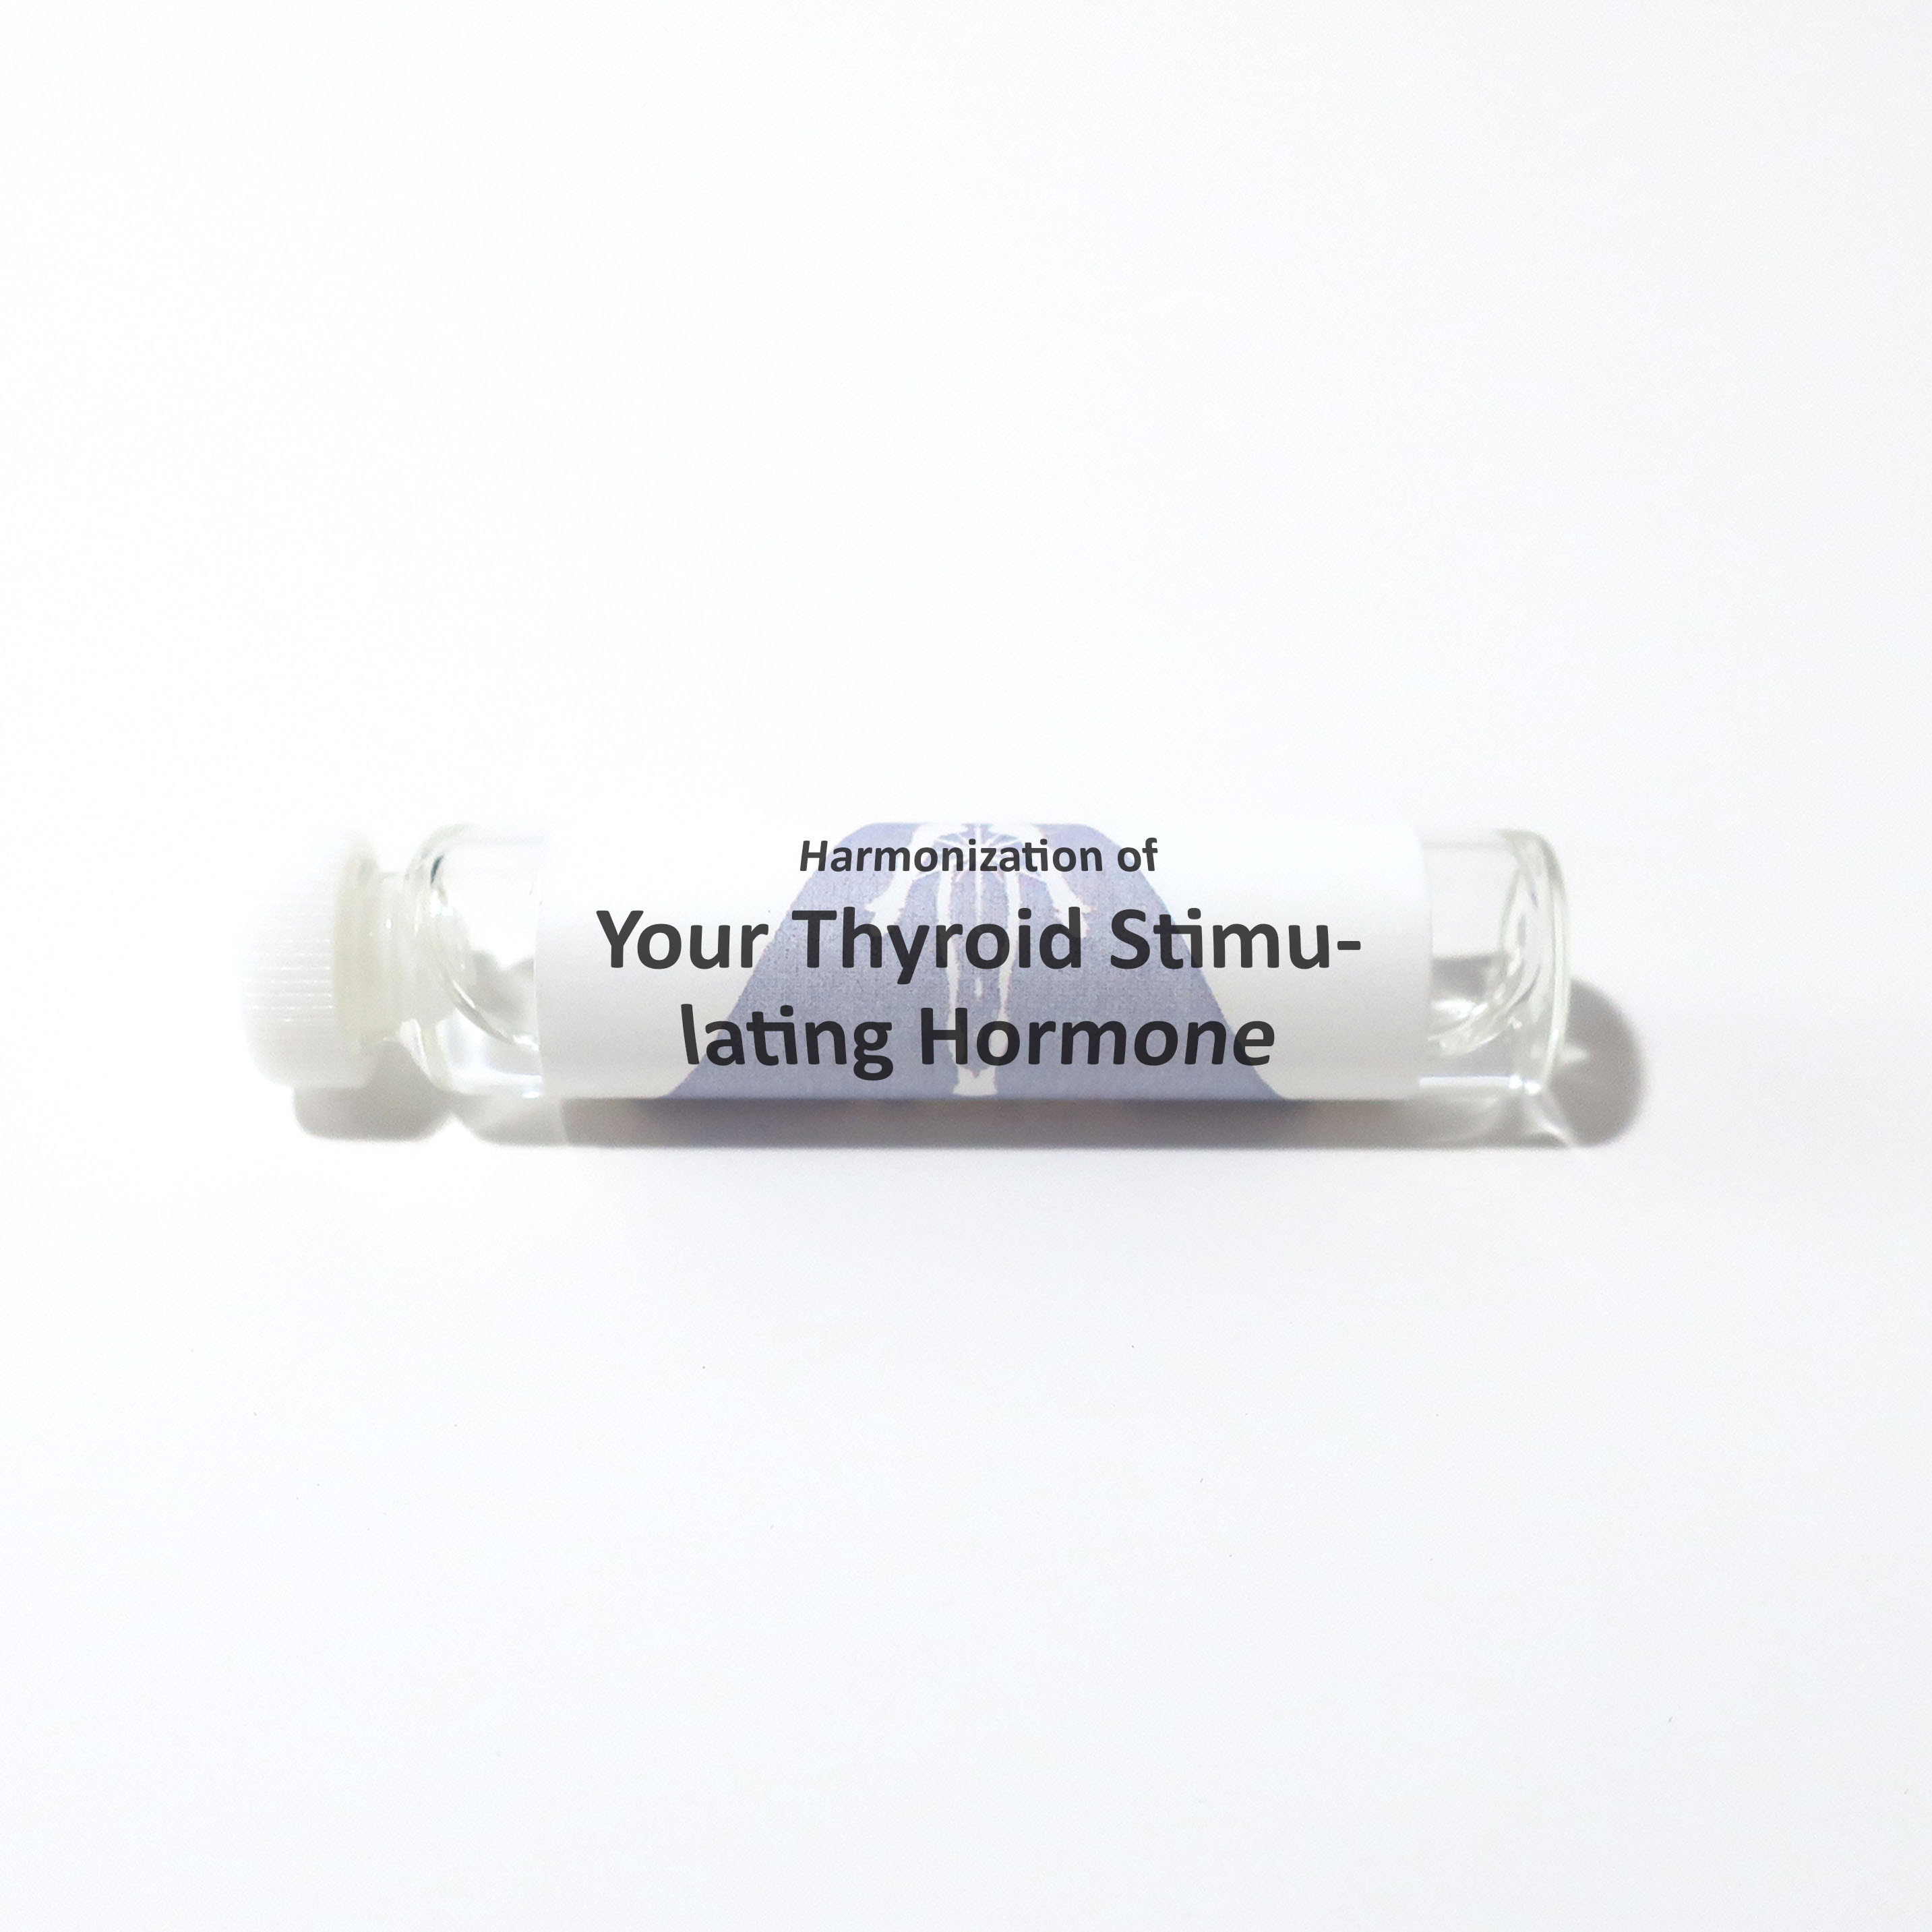 Your Thyroid Stimulating Hormone